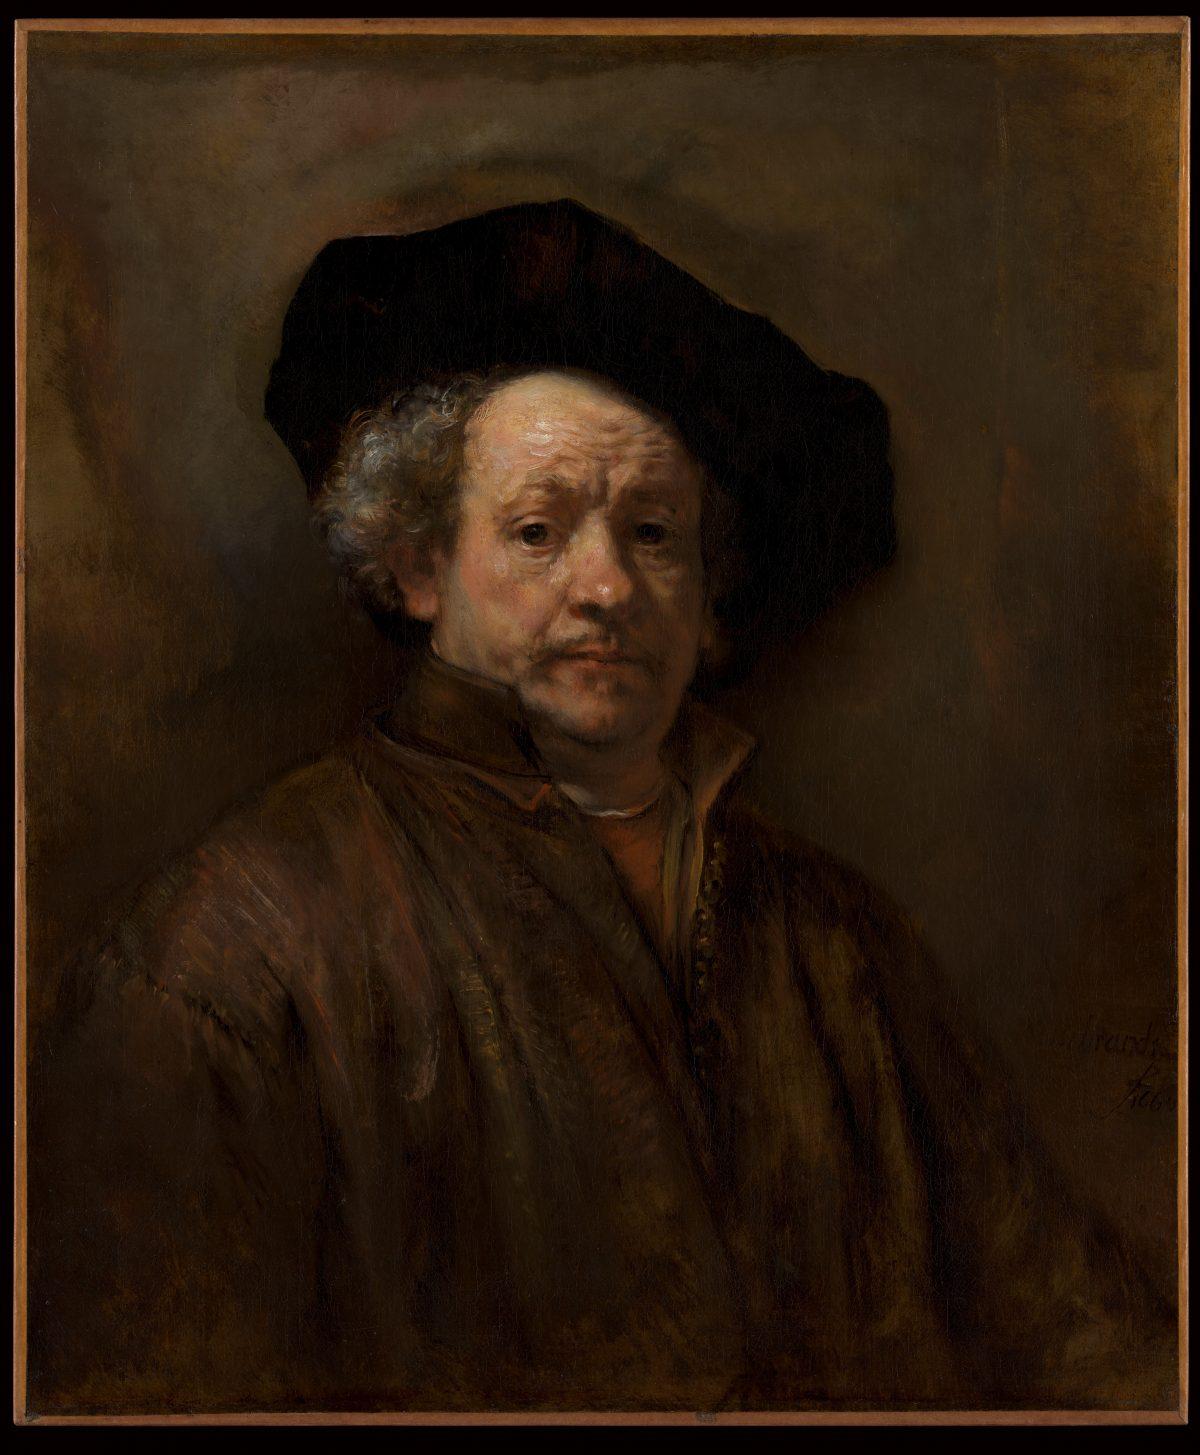 “Self-Portrait,” 1660, Rembrandt van Rijn. Oil on canvas. 31 5/8 inches by 26 1/2 inches, Bequest of Benjamin Altman, 1913. (The Metropolitan Museum of Art, New York)